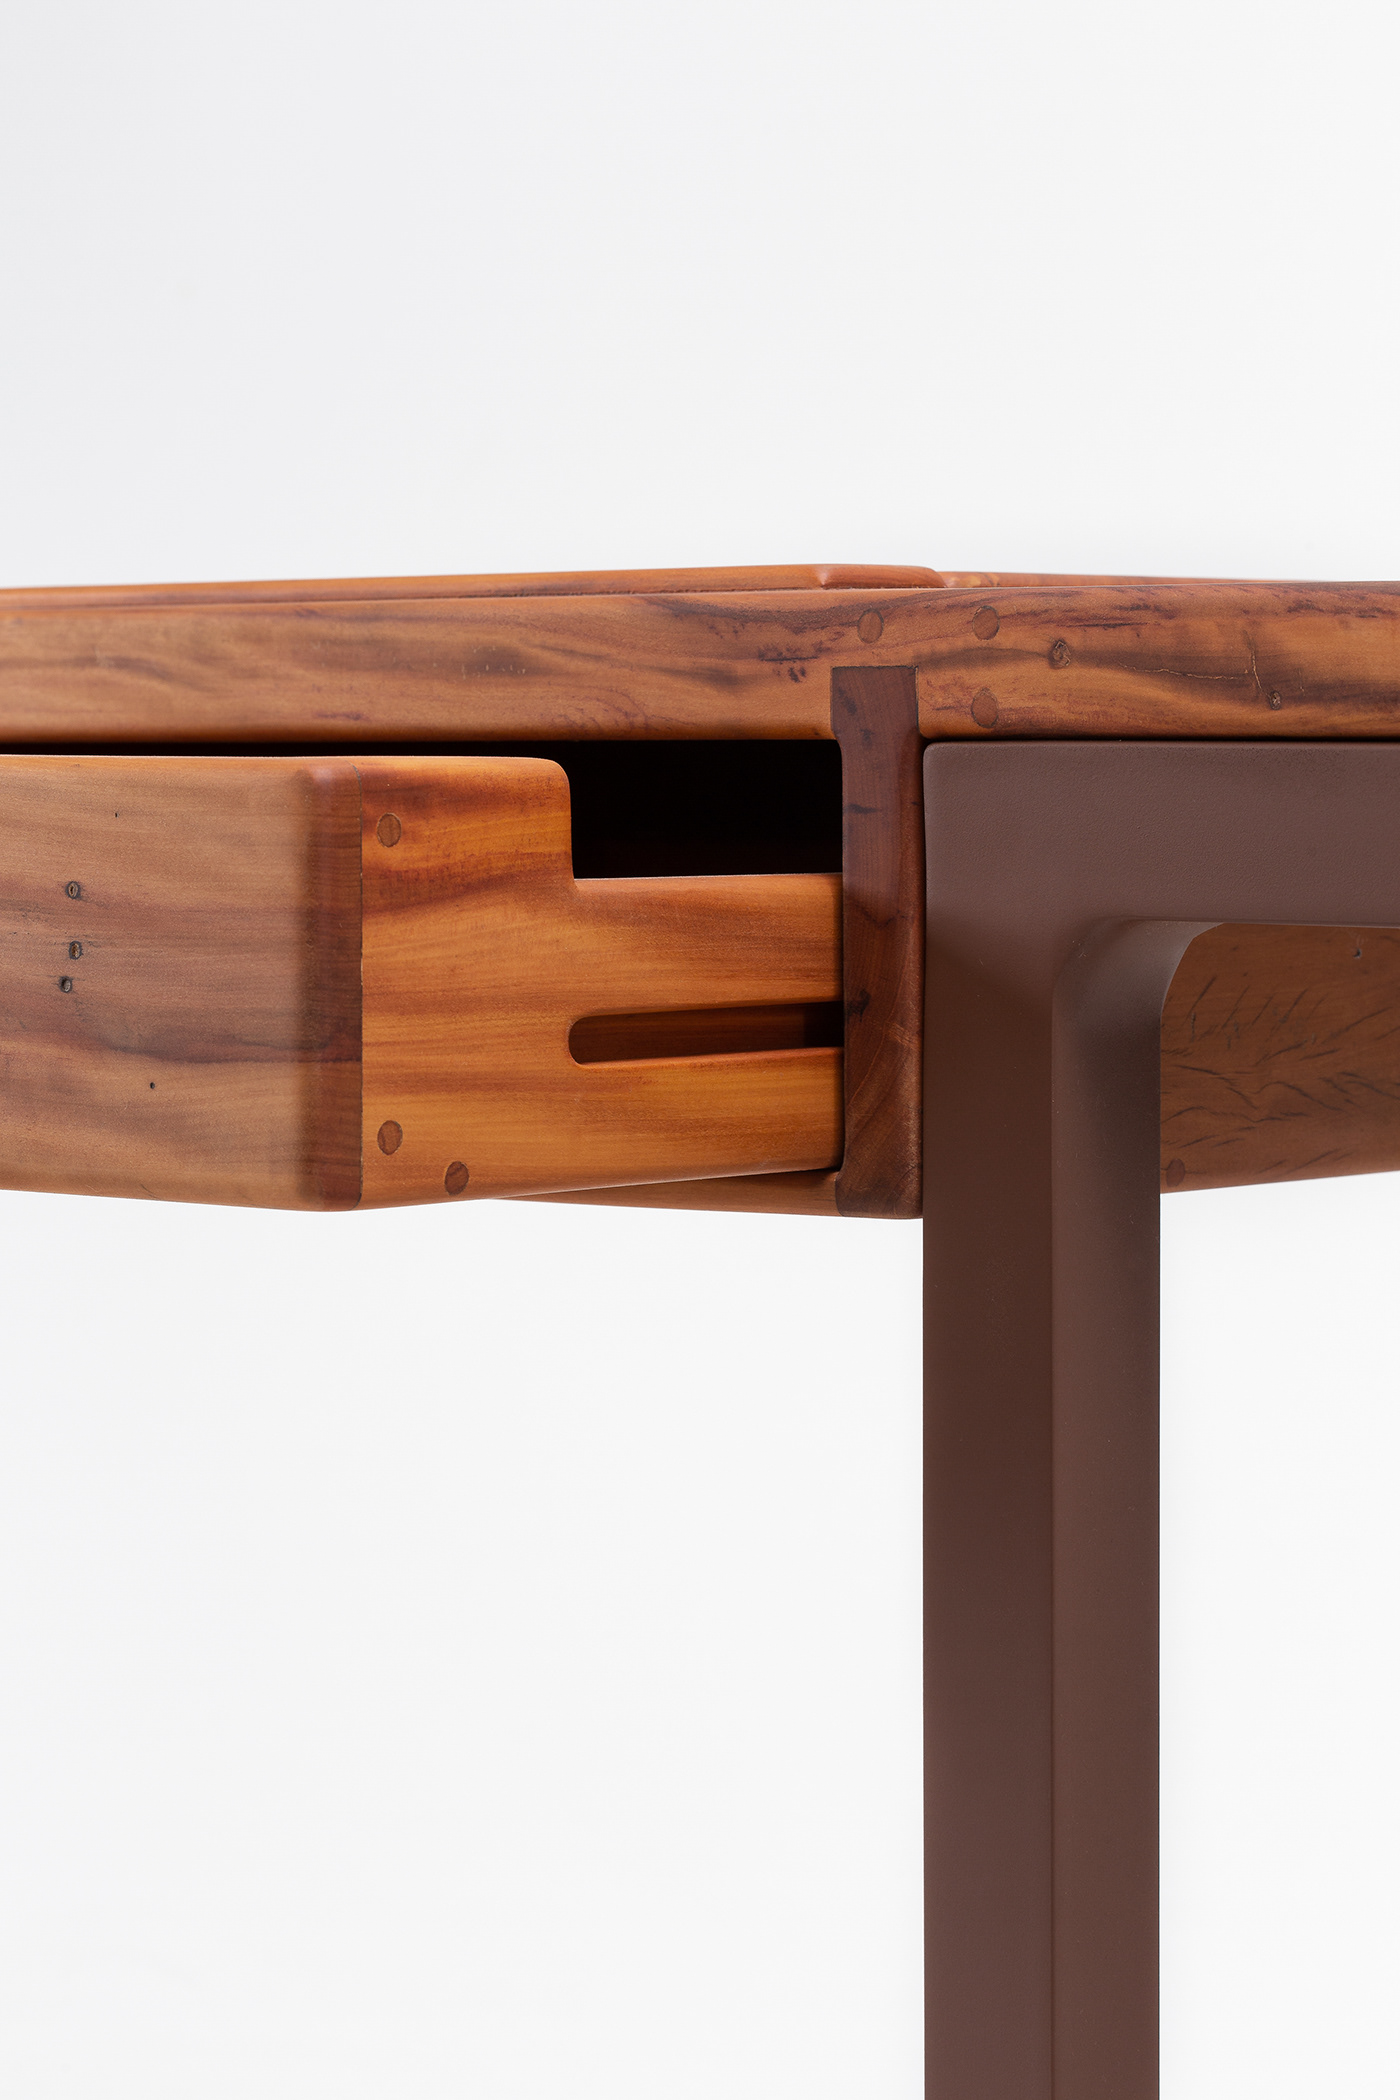 design furniture interior design  architecture Cantilever structure woodworking furniture design  table structural design